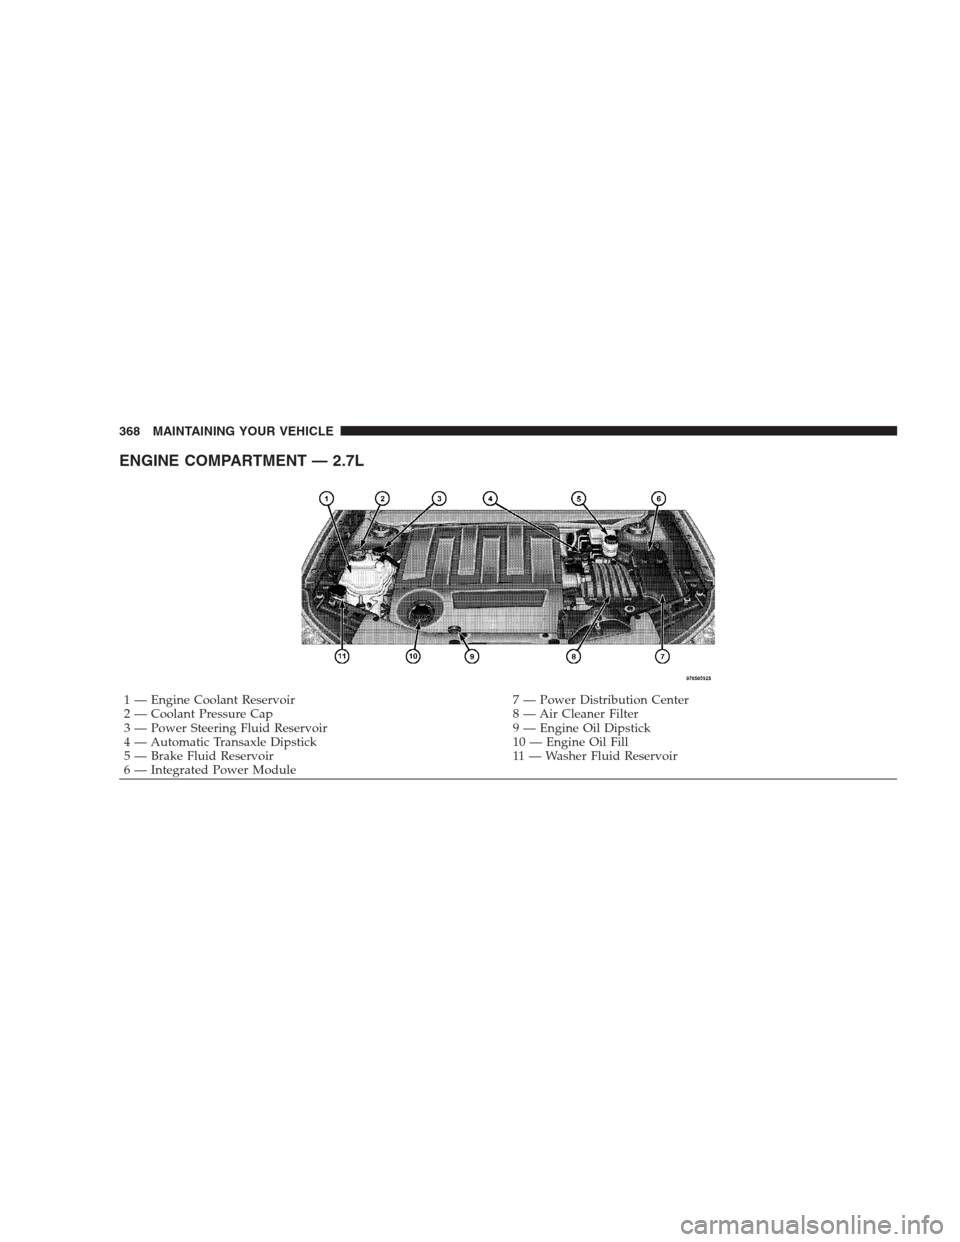 DODGE AVENGER 2009 2.G User Guide ENGINE COMPARTMENT — 2.7L
1 — Engine Coolant Reservoir 7 — Power Distribution Center
2 — Coolant Pressure Cap 8 — Air Cleaner Filter
3 — Power Steering Fluid Reservoir 9 — Engine Oil Dip